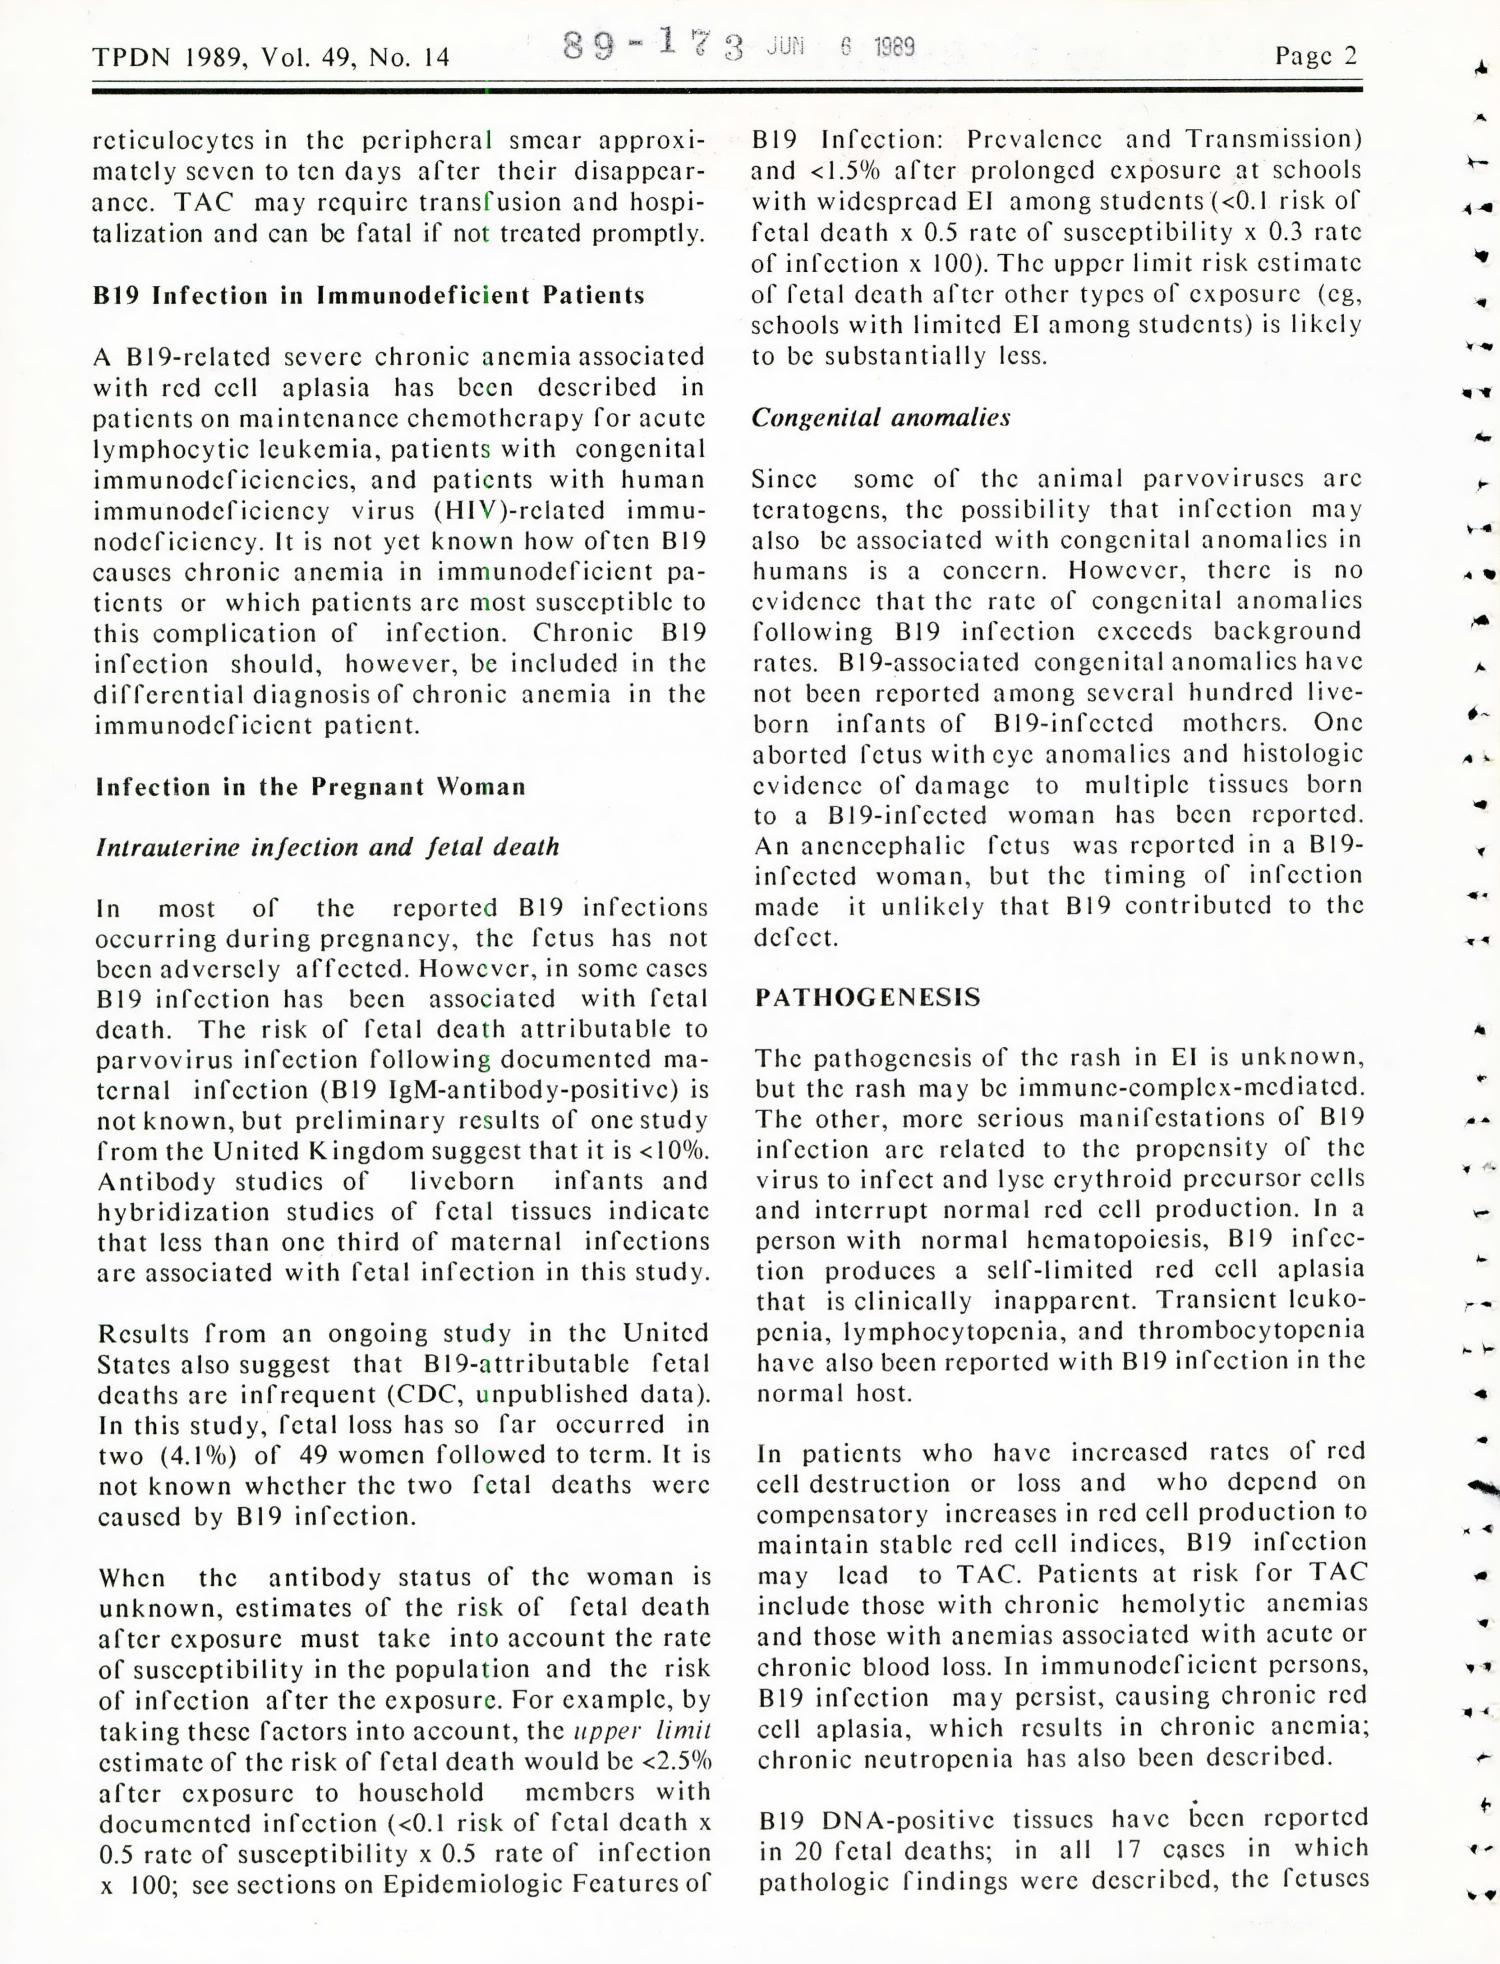 Texas Preventable Disease News, Volume 49, Number 14, April 8, 1989
                                                
                                                    PAGE2
                                                